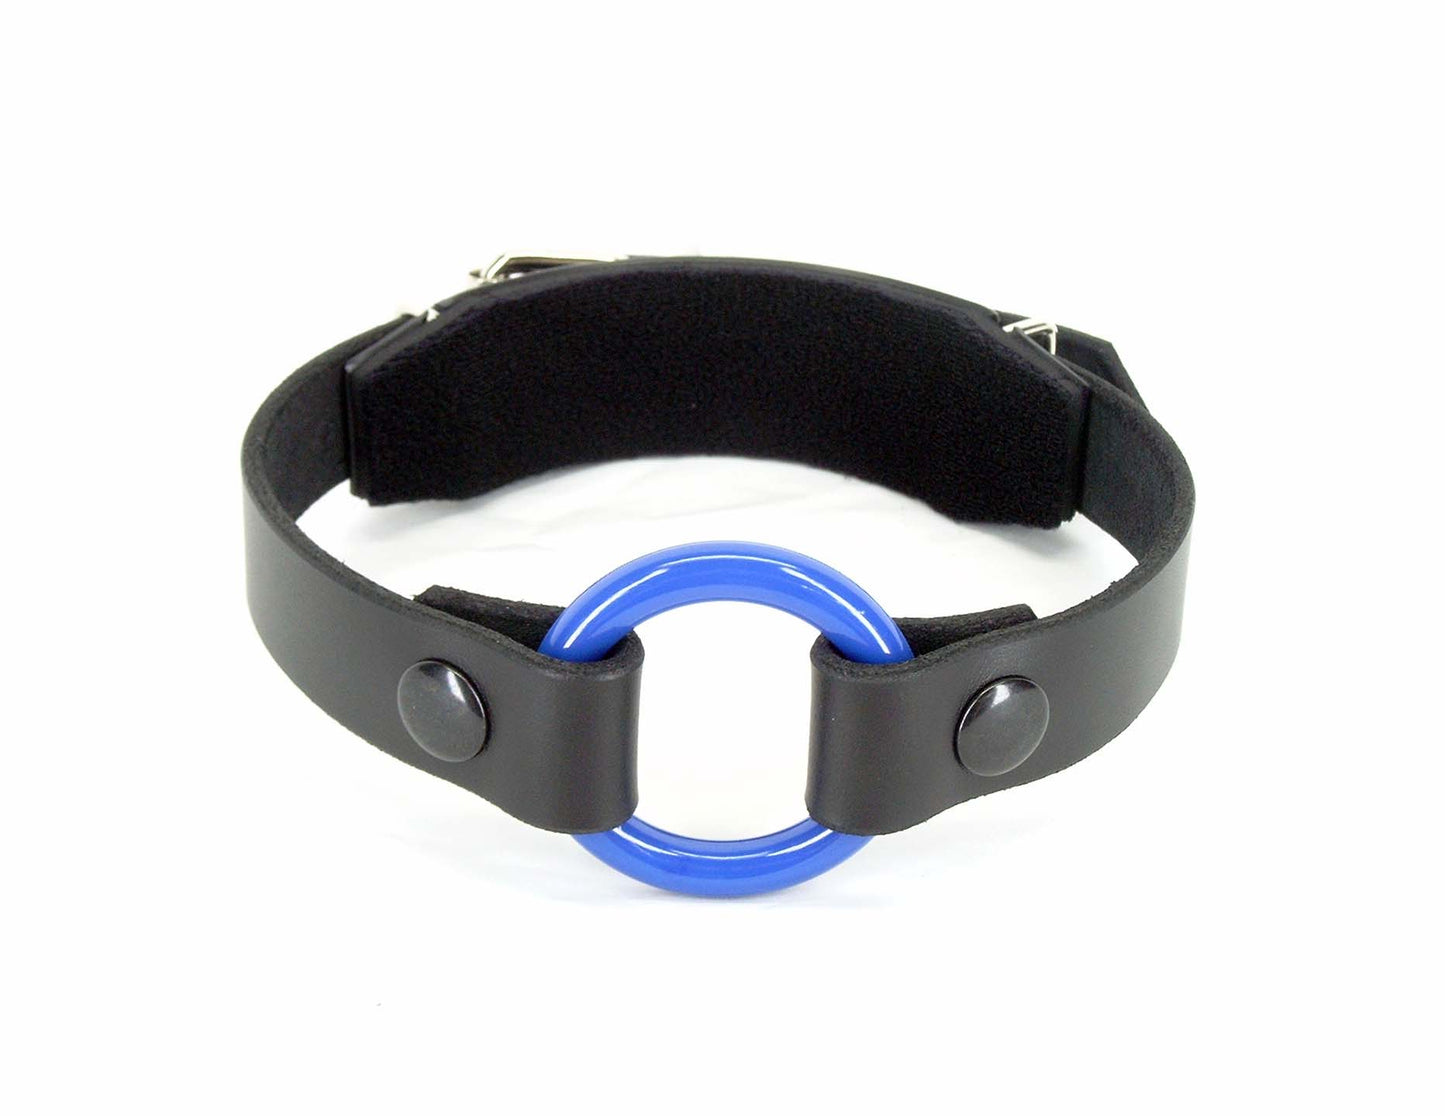 The comfort back O-ring gag with blue dental safe O-ring against white background.